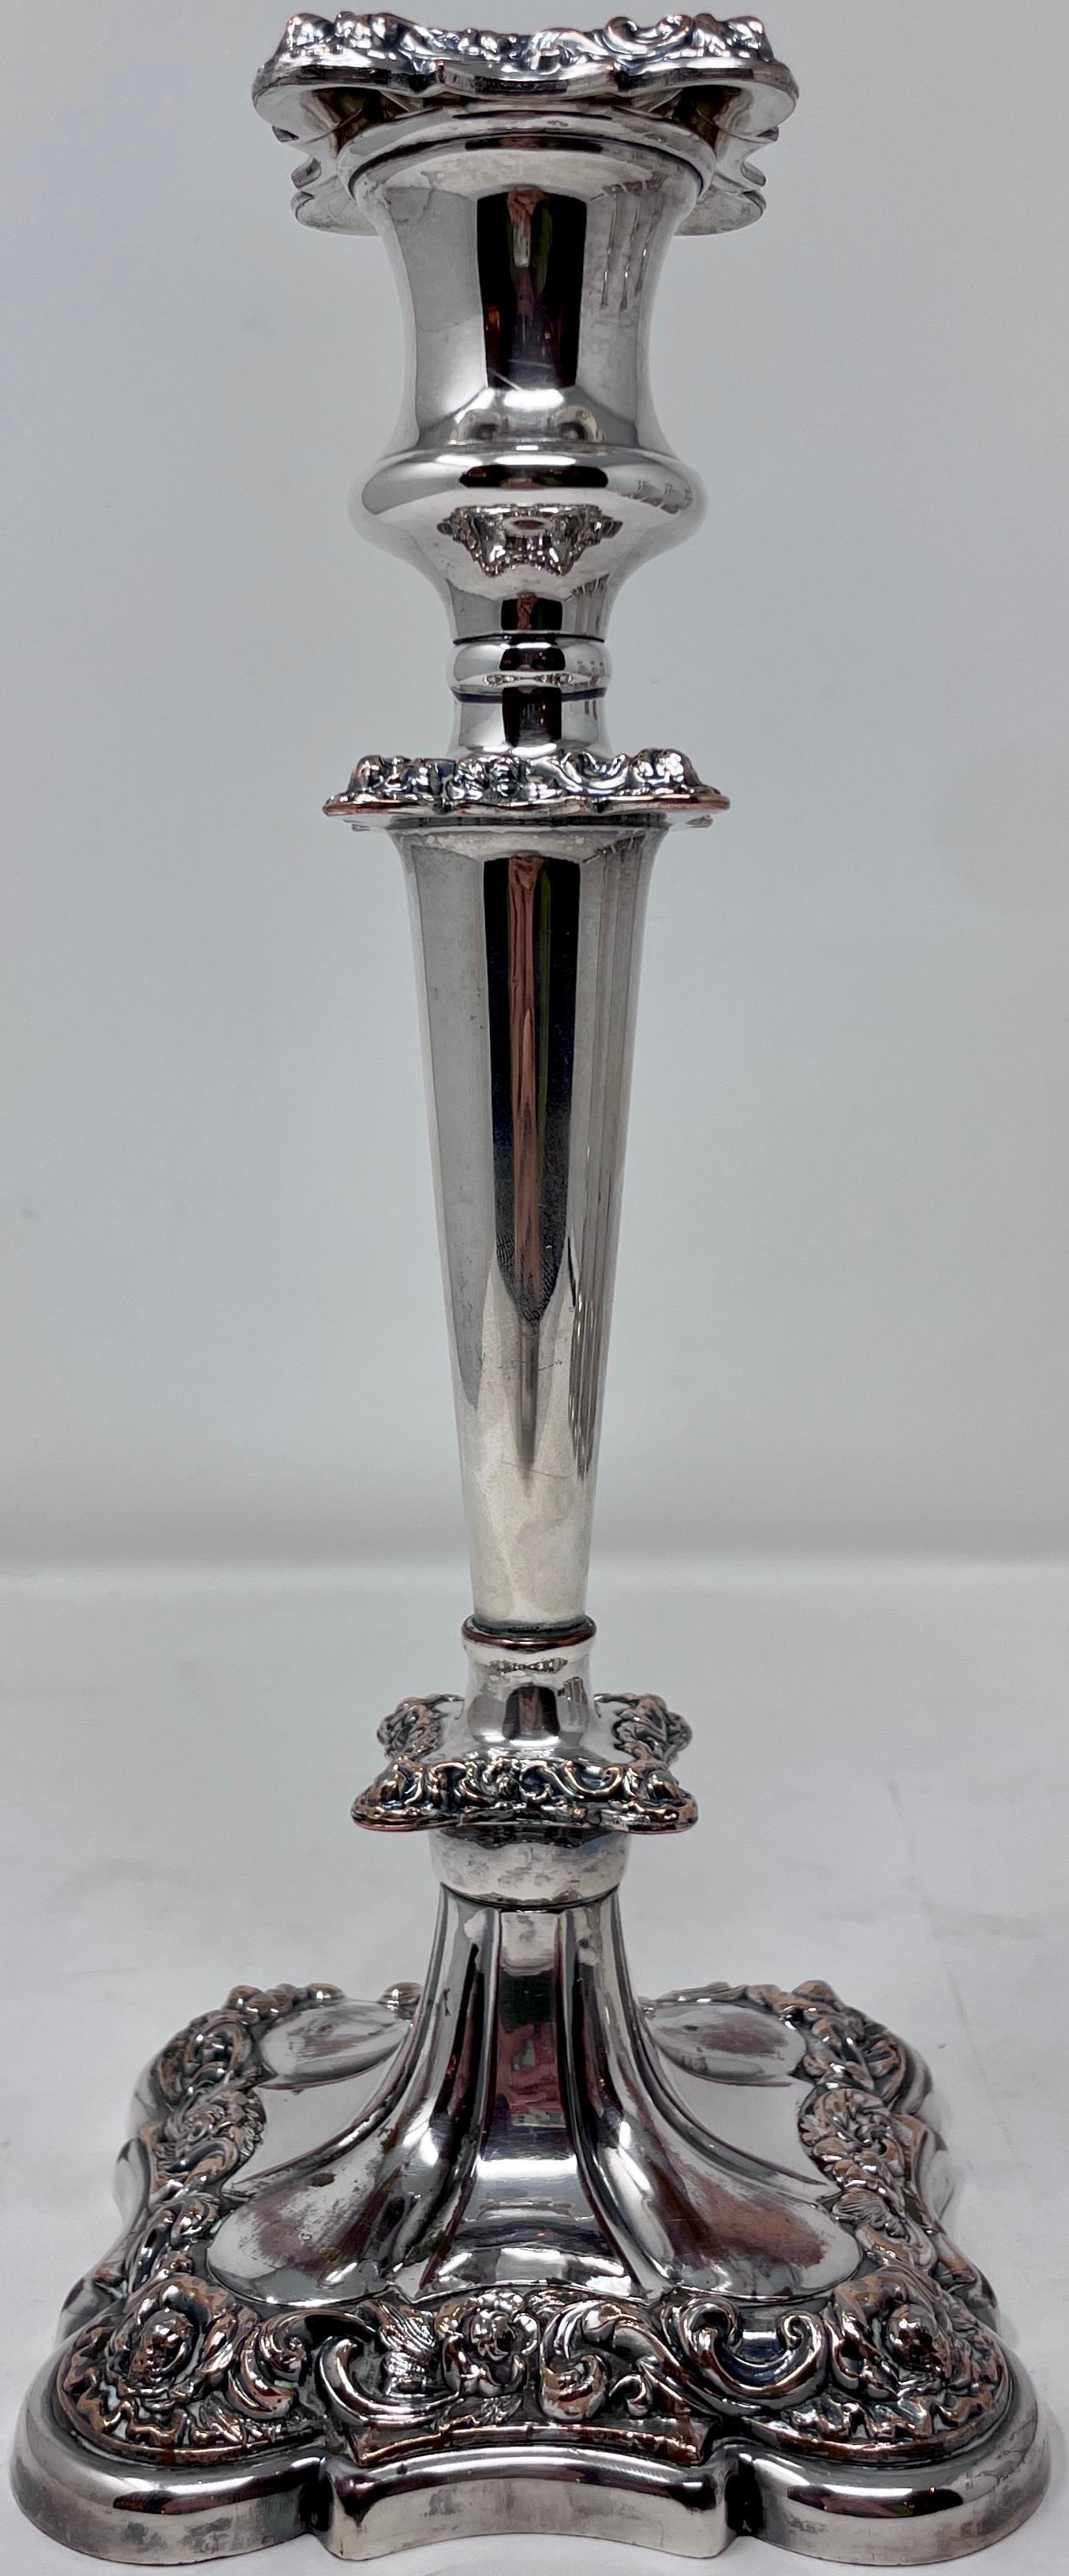 Set of 4 antique English sheffield silver candlesticks, Circa 1860's.